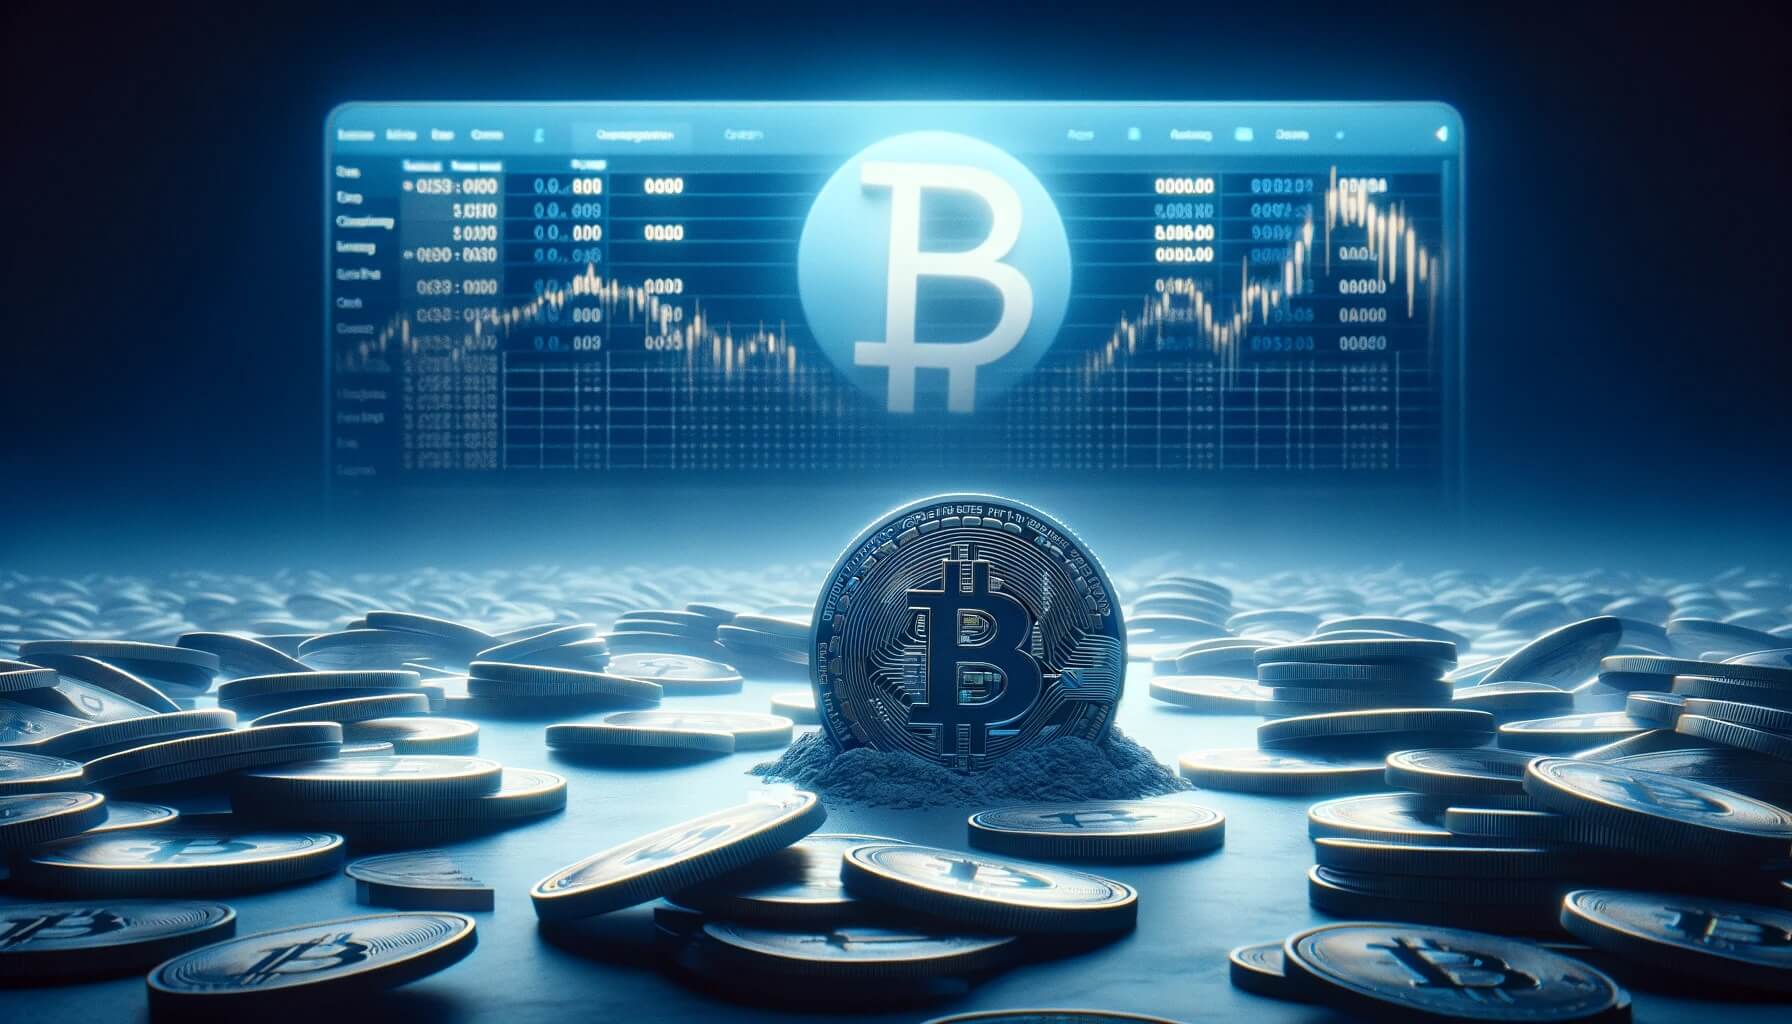  btc imminent premium closure global bitcoin bittrex 